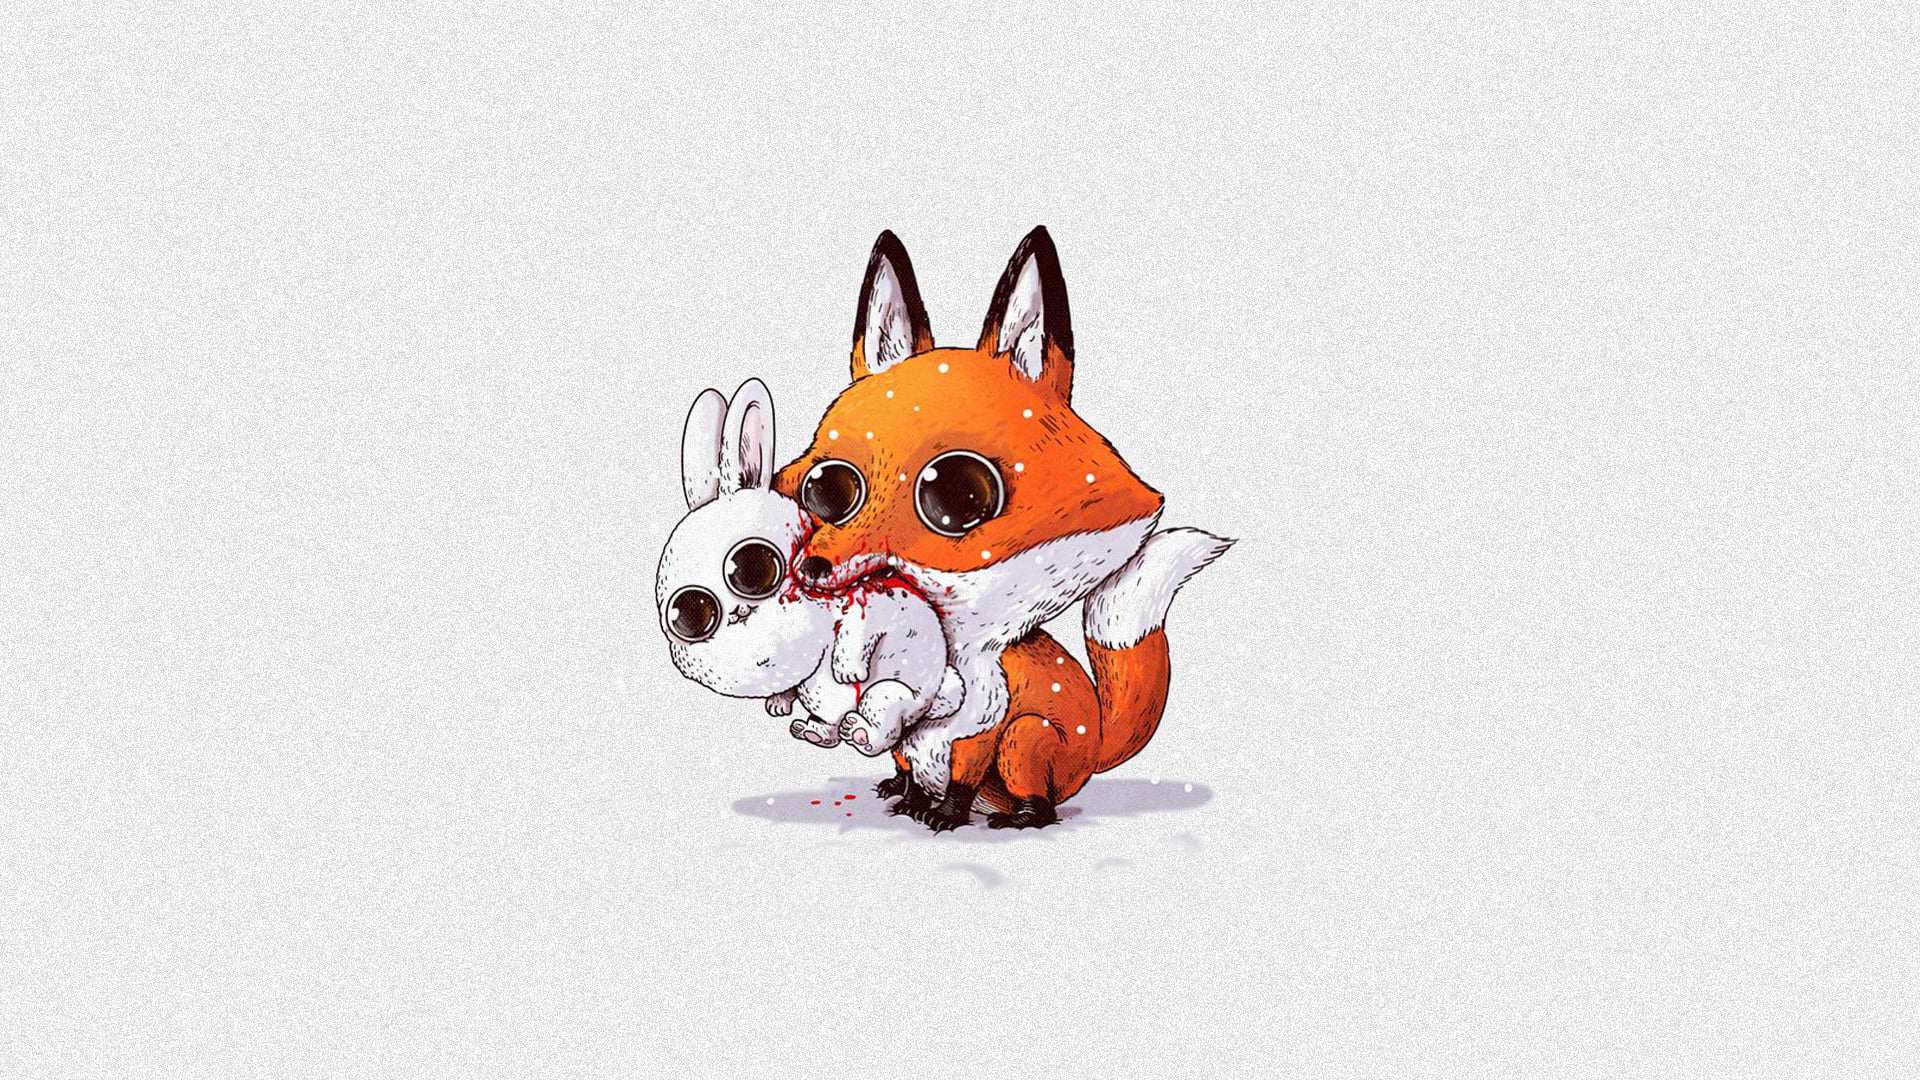 red fox illustration, animals, minimalism